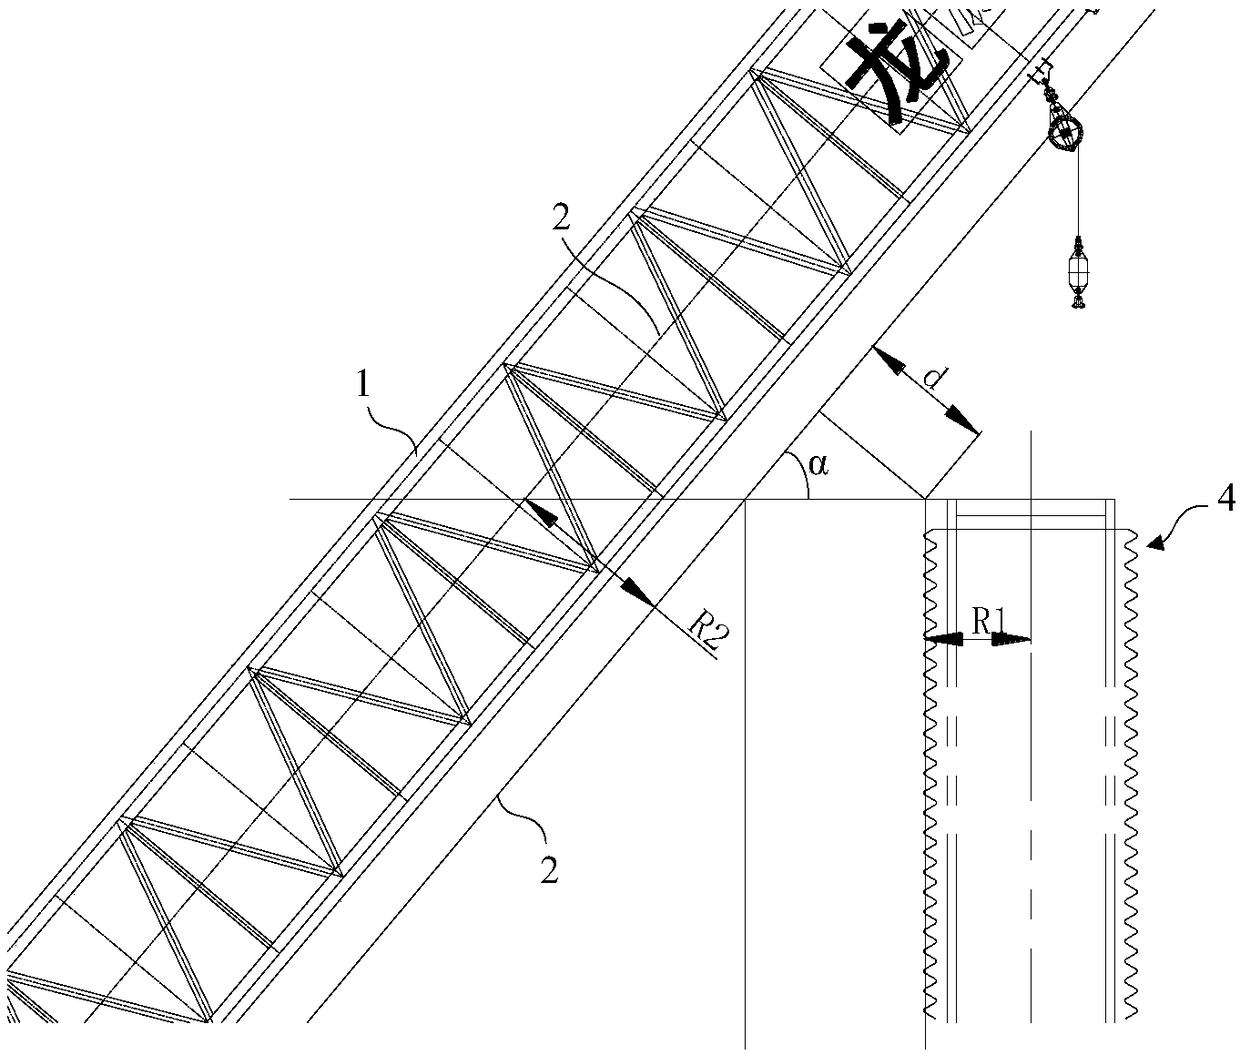 Platform crane collision prevention system and method